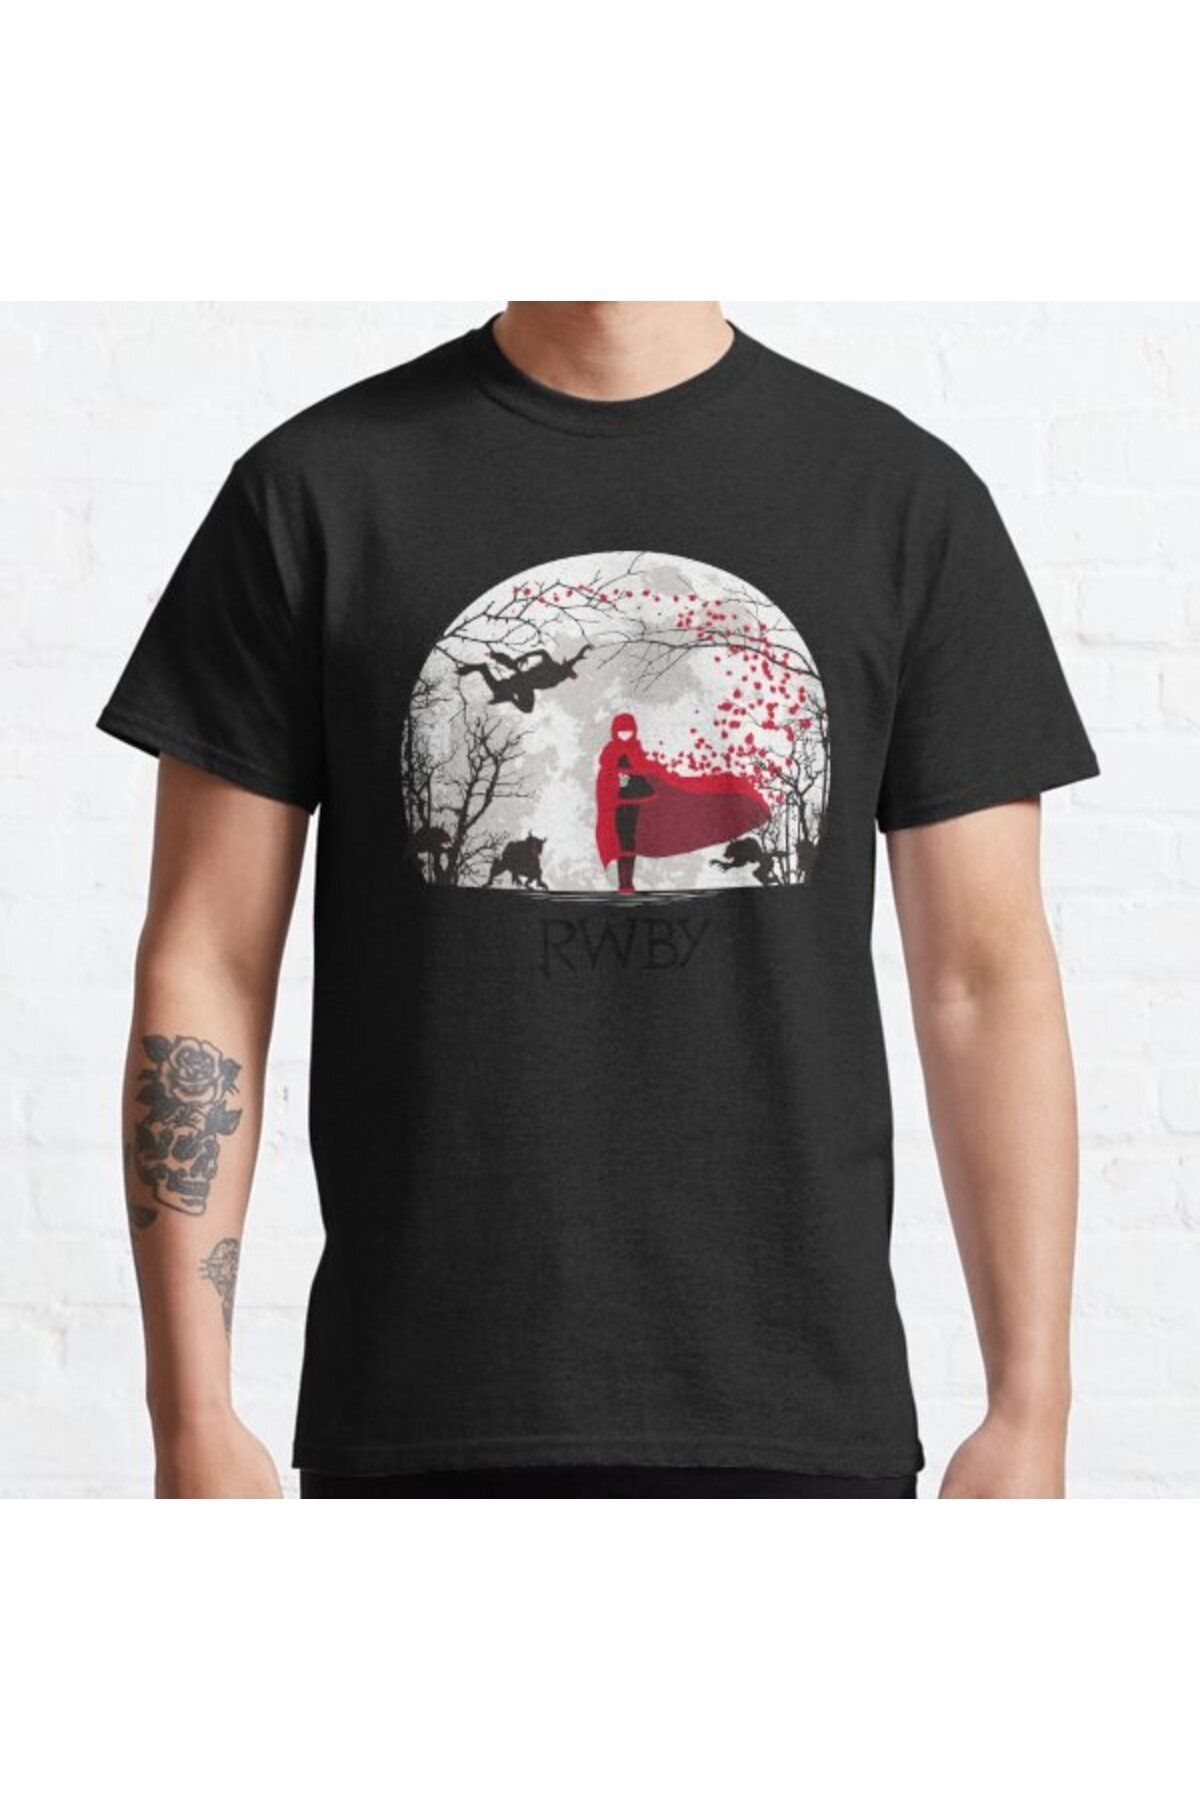 ZOKAWEAR Oversize RWBY Ruby Rose Starry Crescent Sky Ruby Rose Tasarım Baskılı T-Shirt